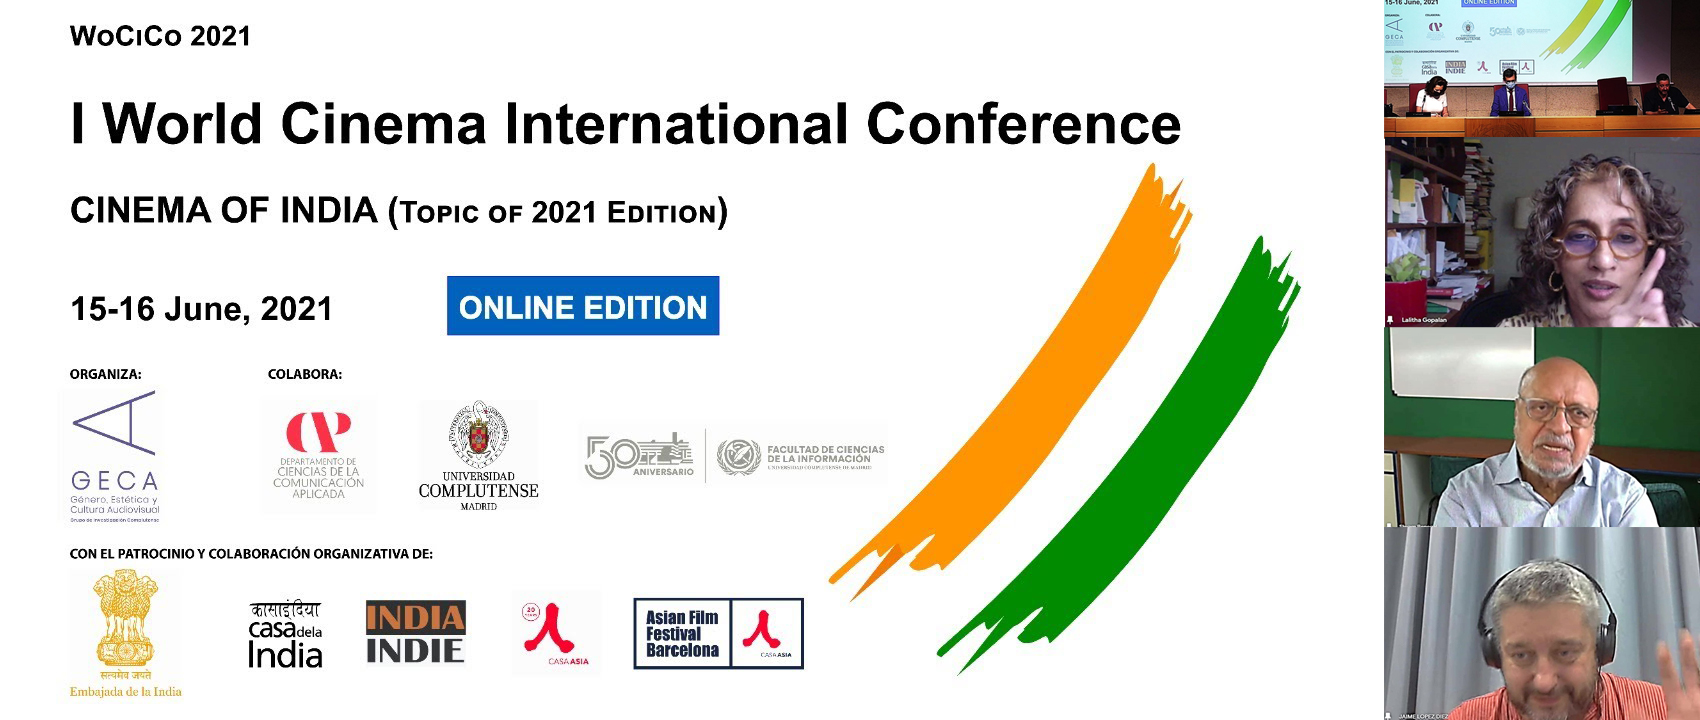 I World Cinema International Conference - 1